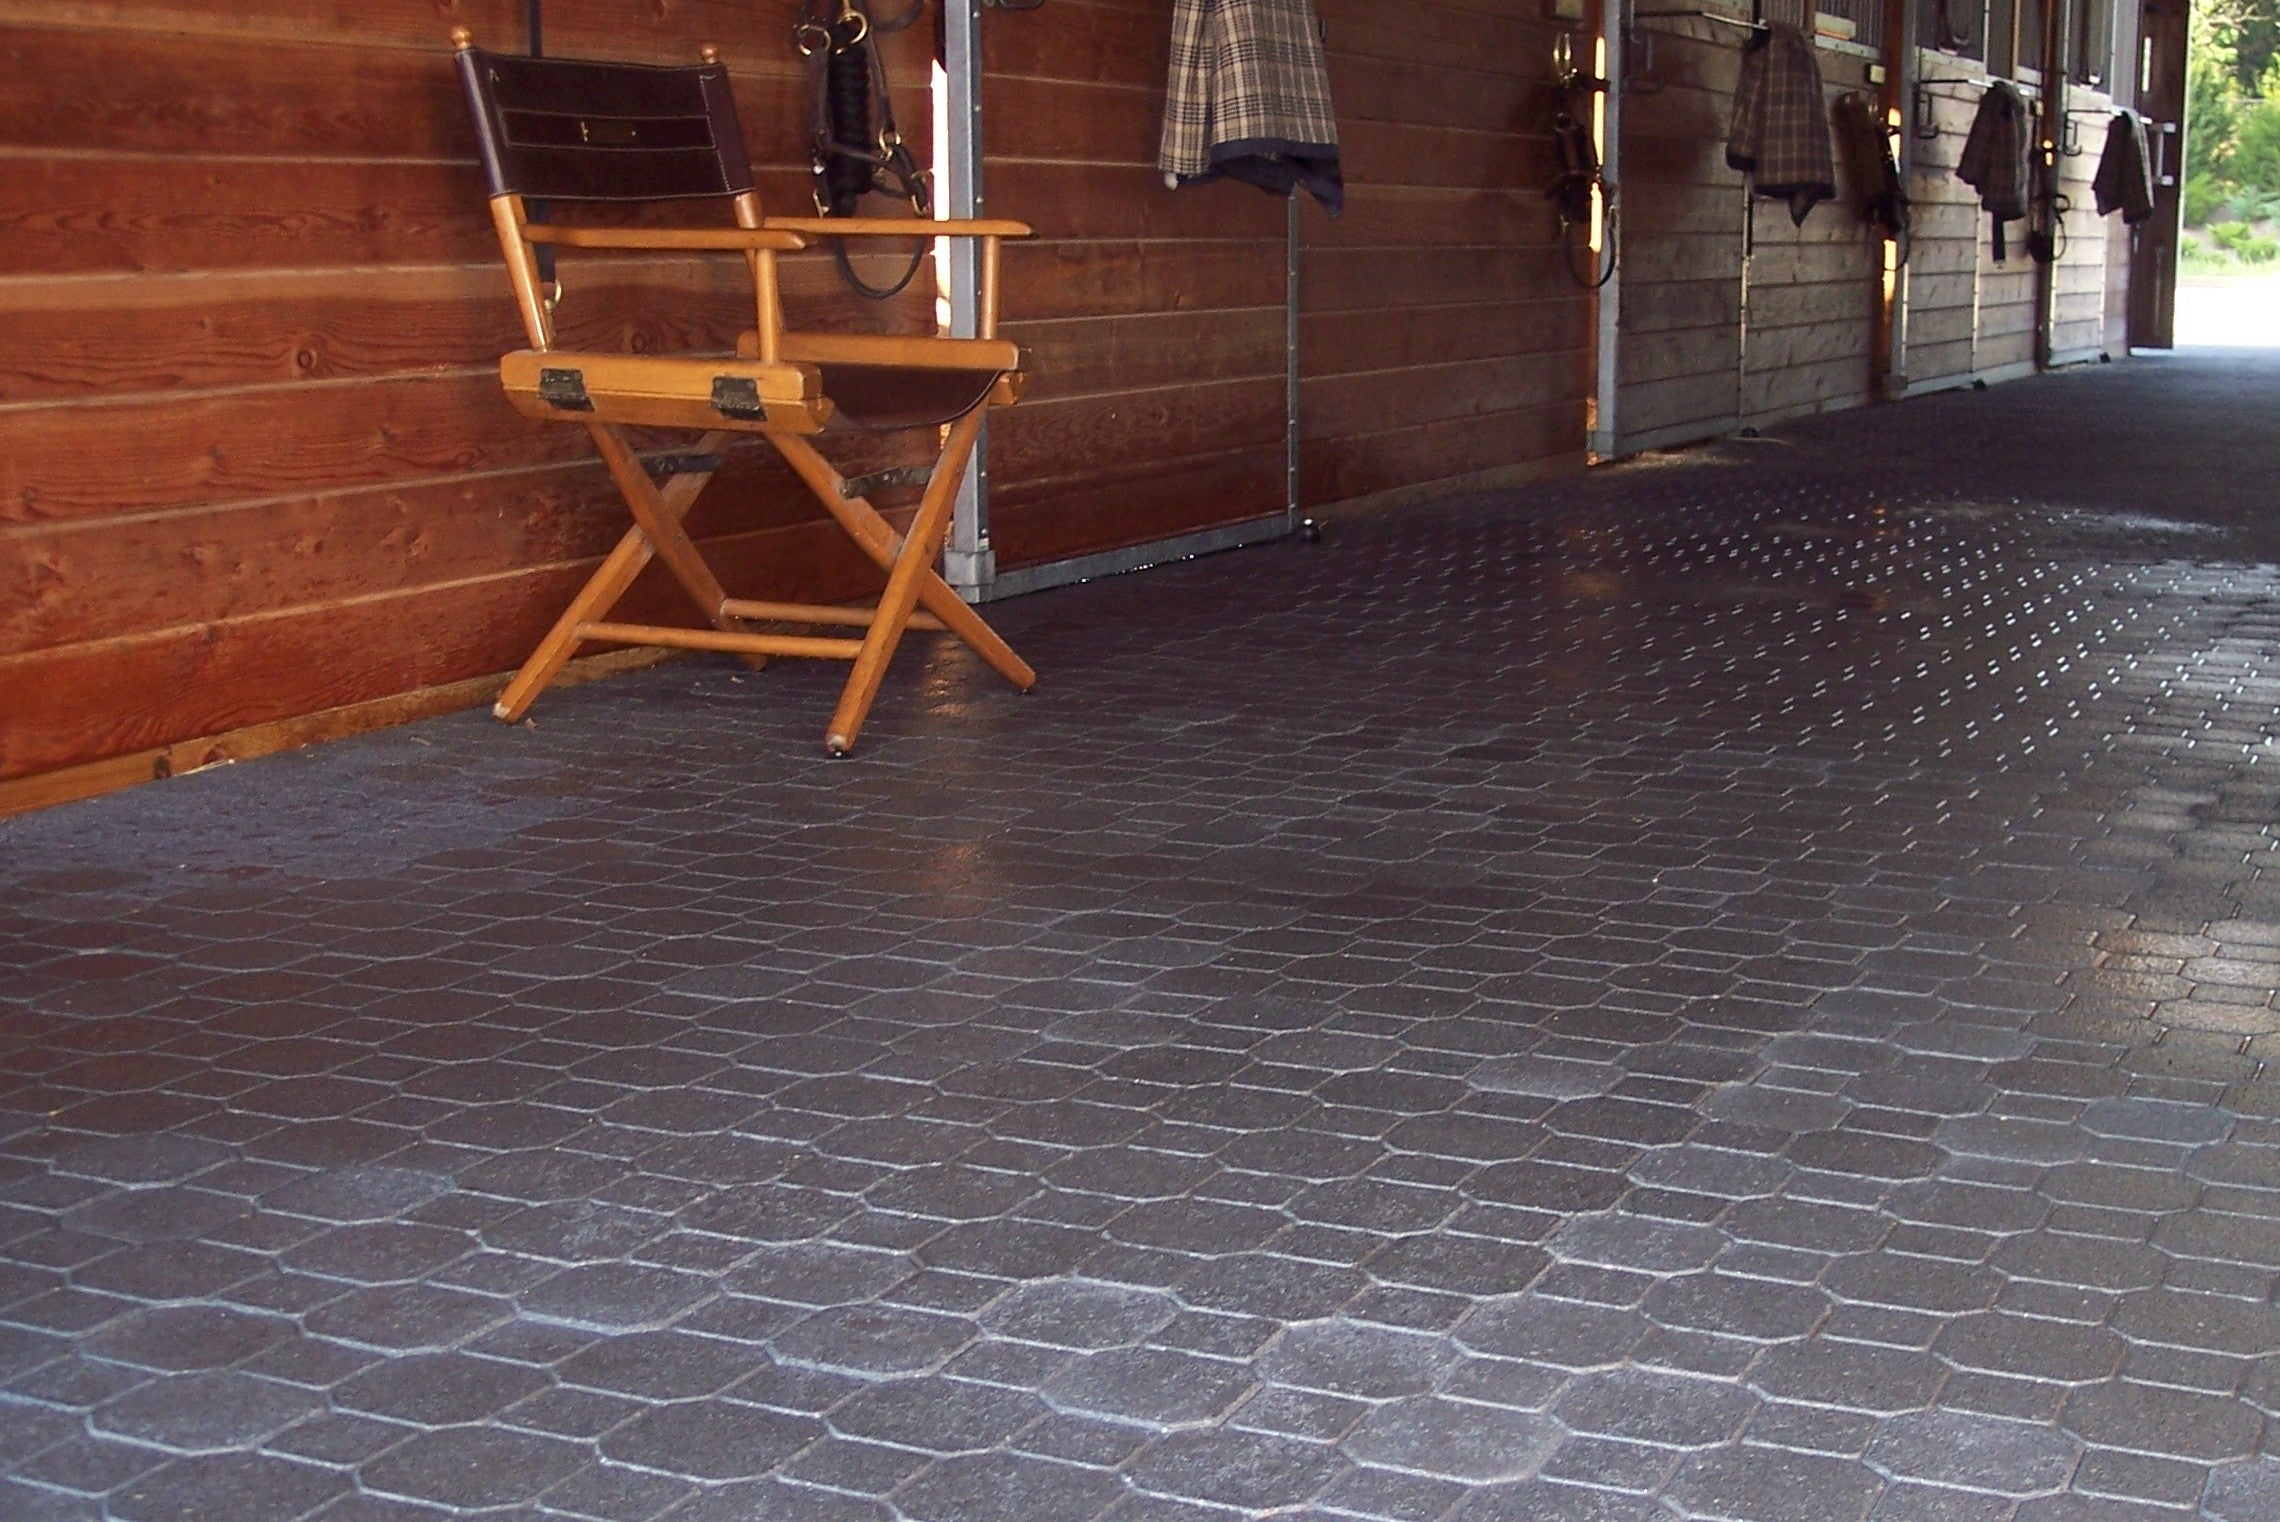 Rubber interlock flooring inside horse barn, ideal flooring solution for horses